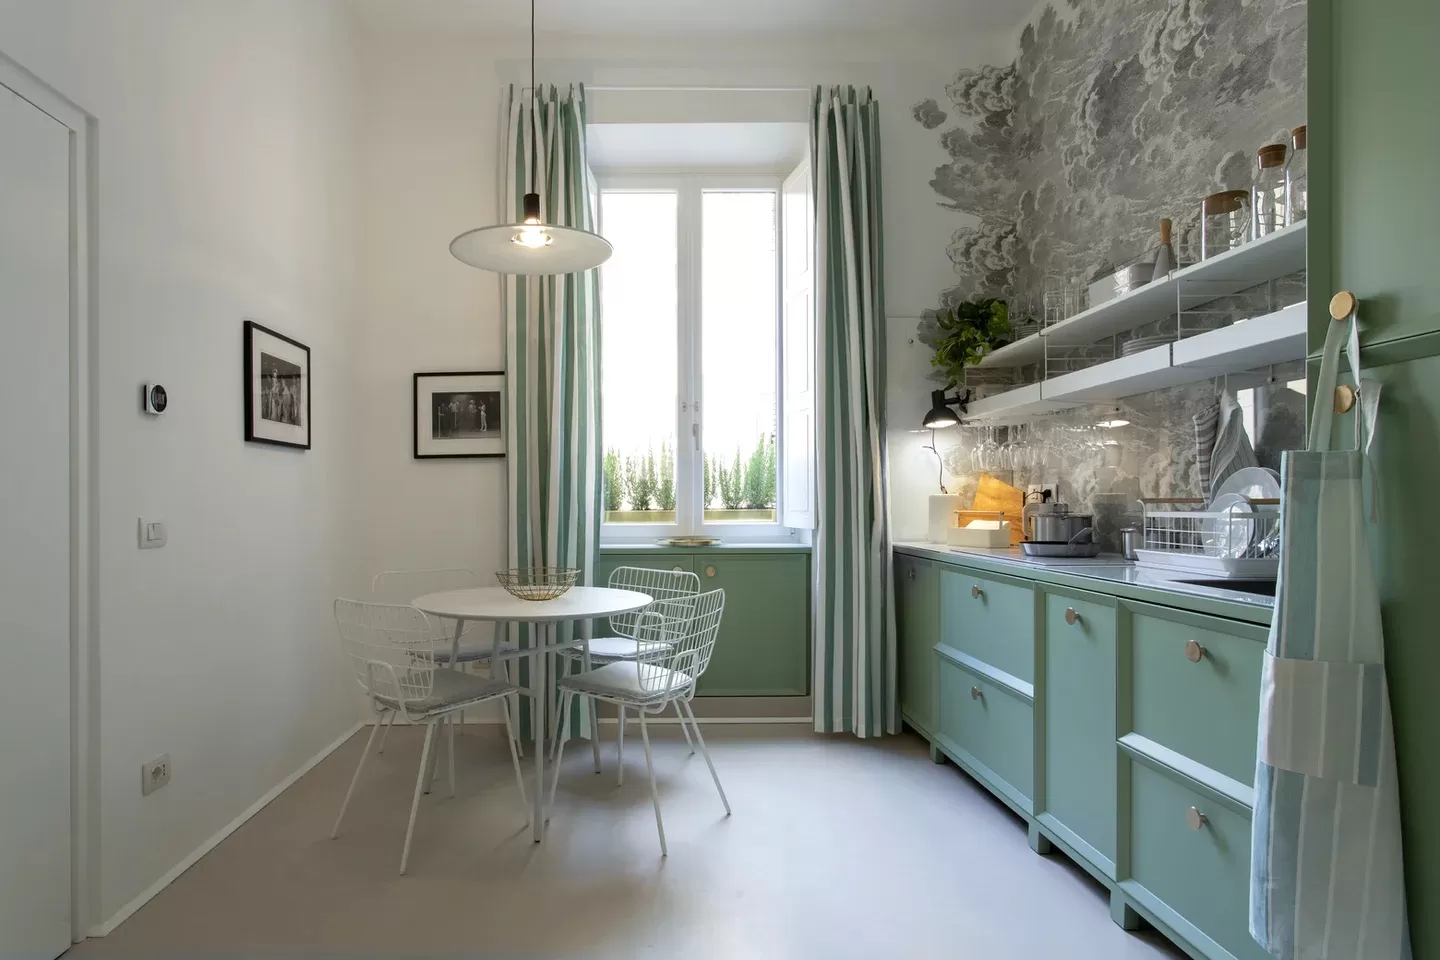 Hotels near Termini Station in Rome - Oregano Green apartment - Kitchen